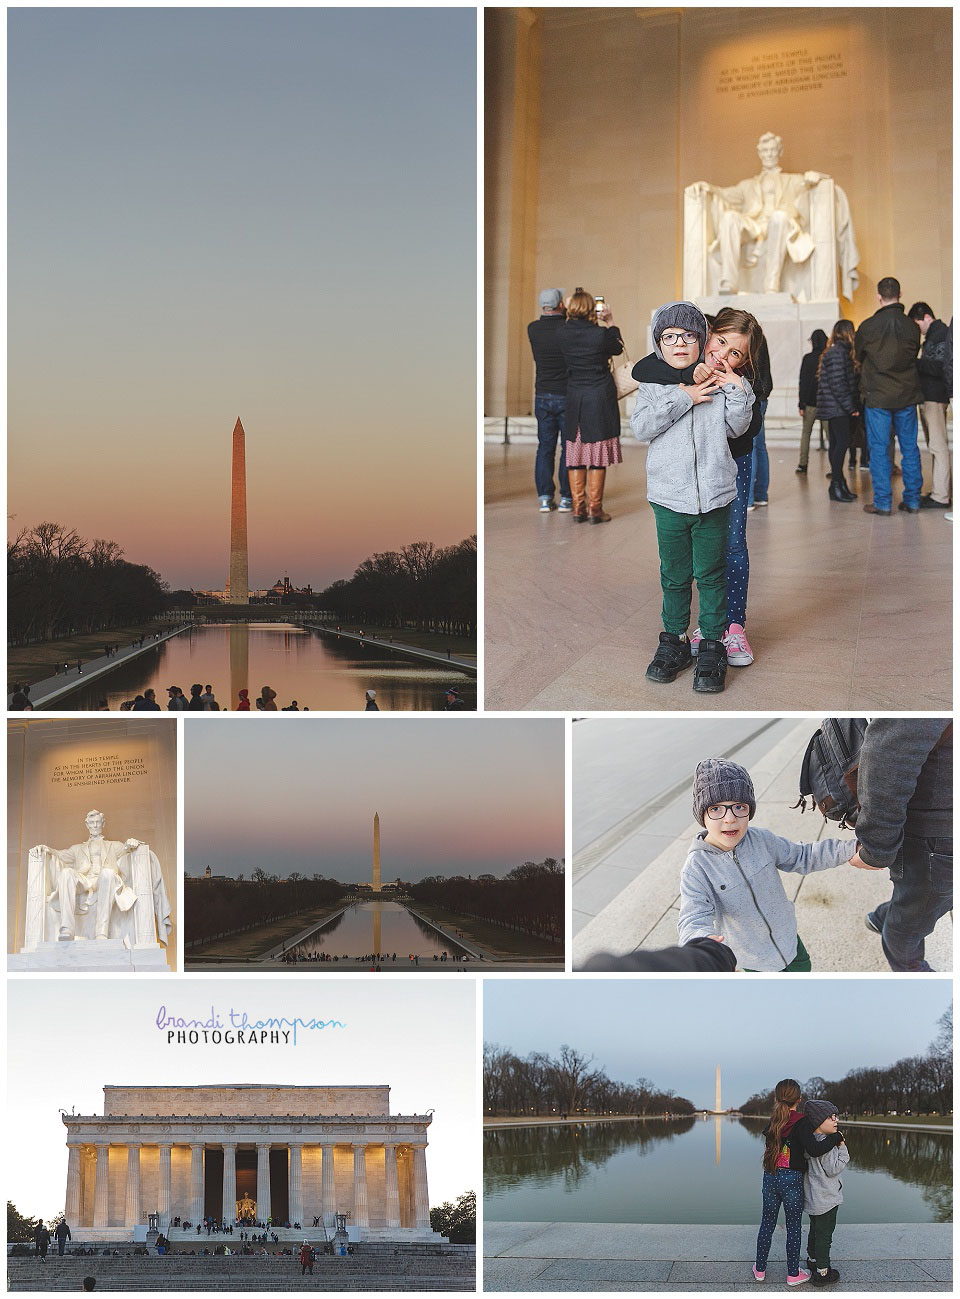 travel photos from washington DC at sunset, washington memorial, lincoln memorial